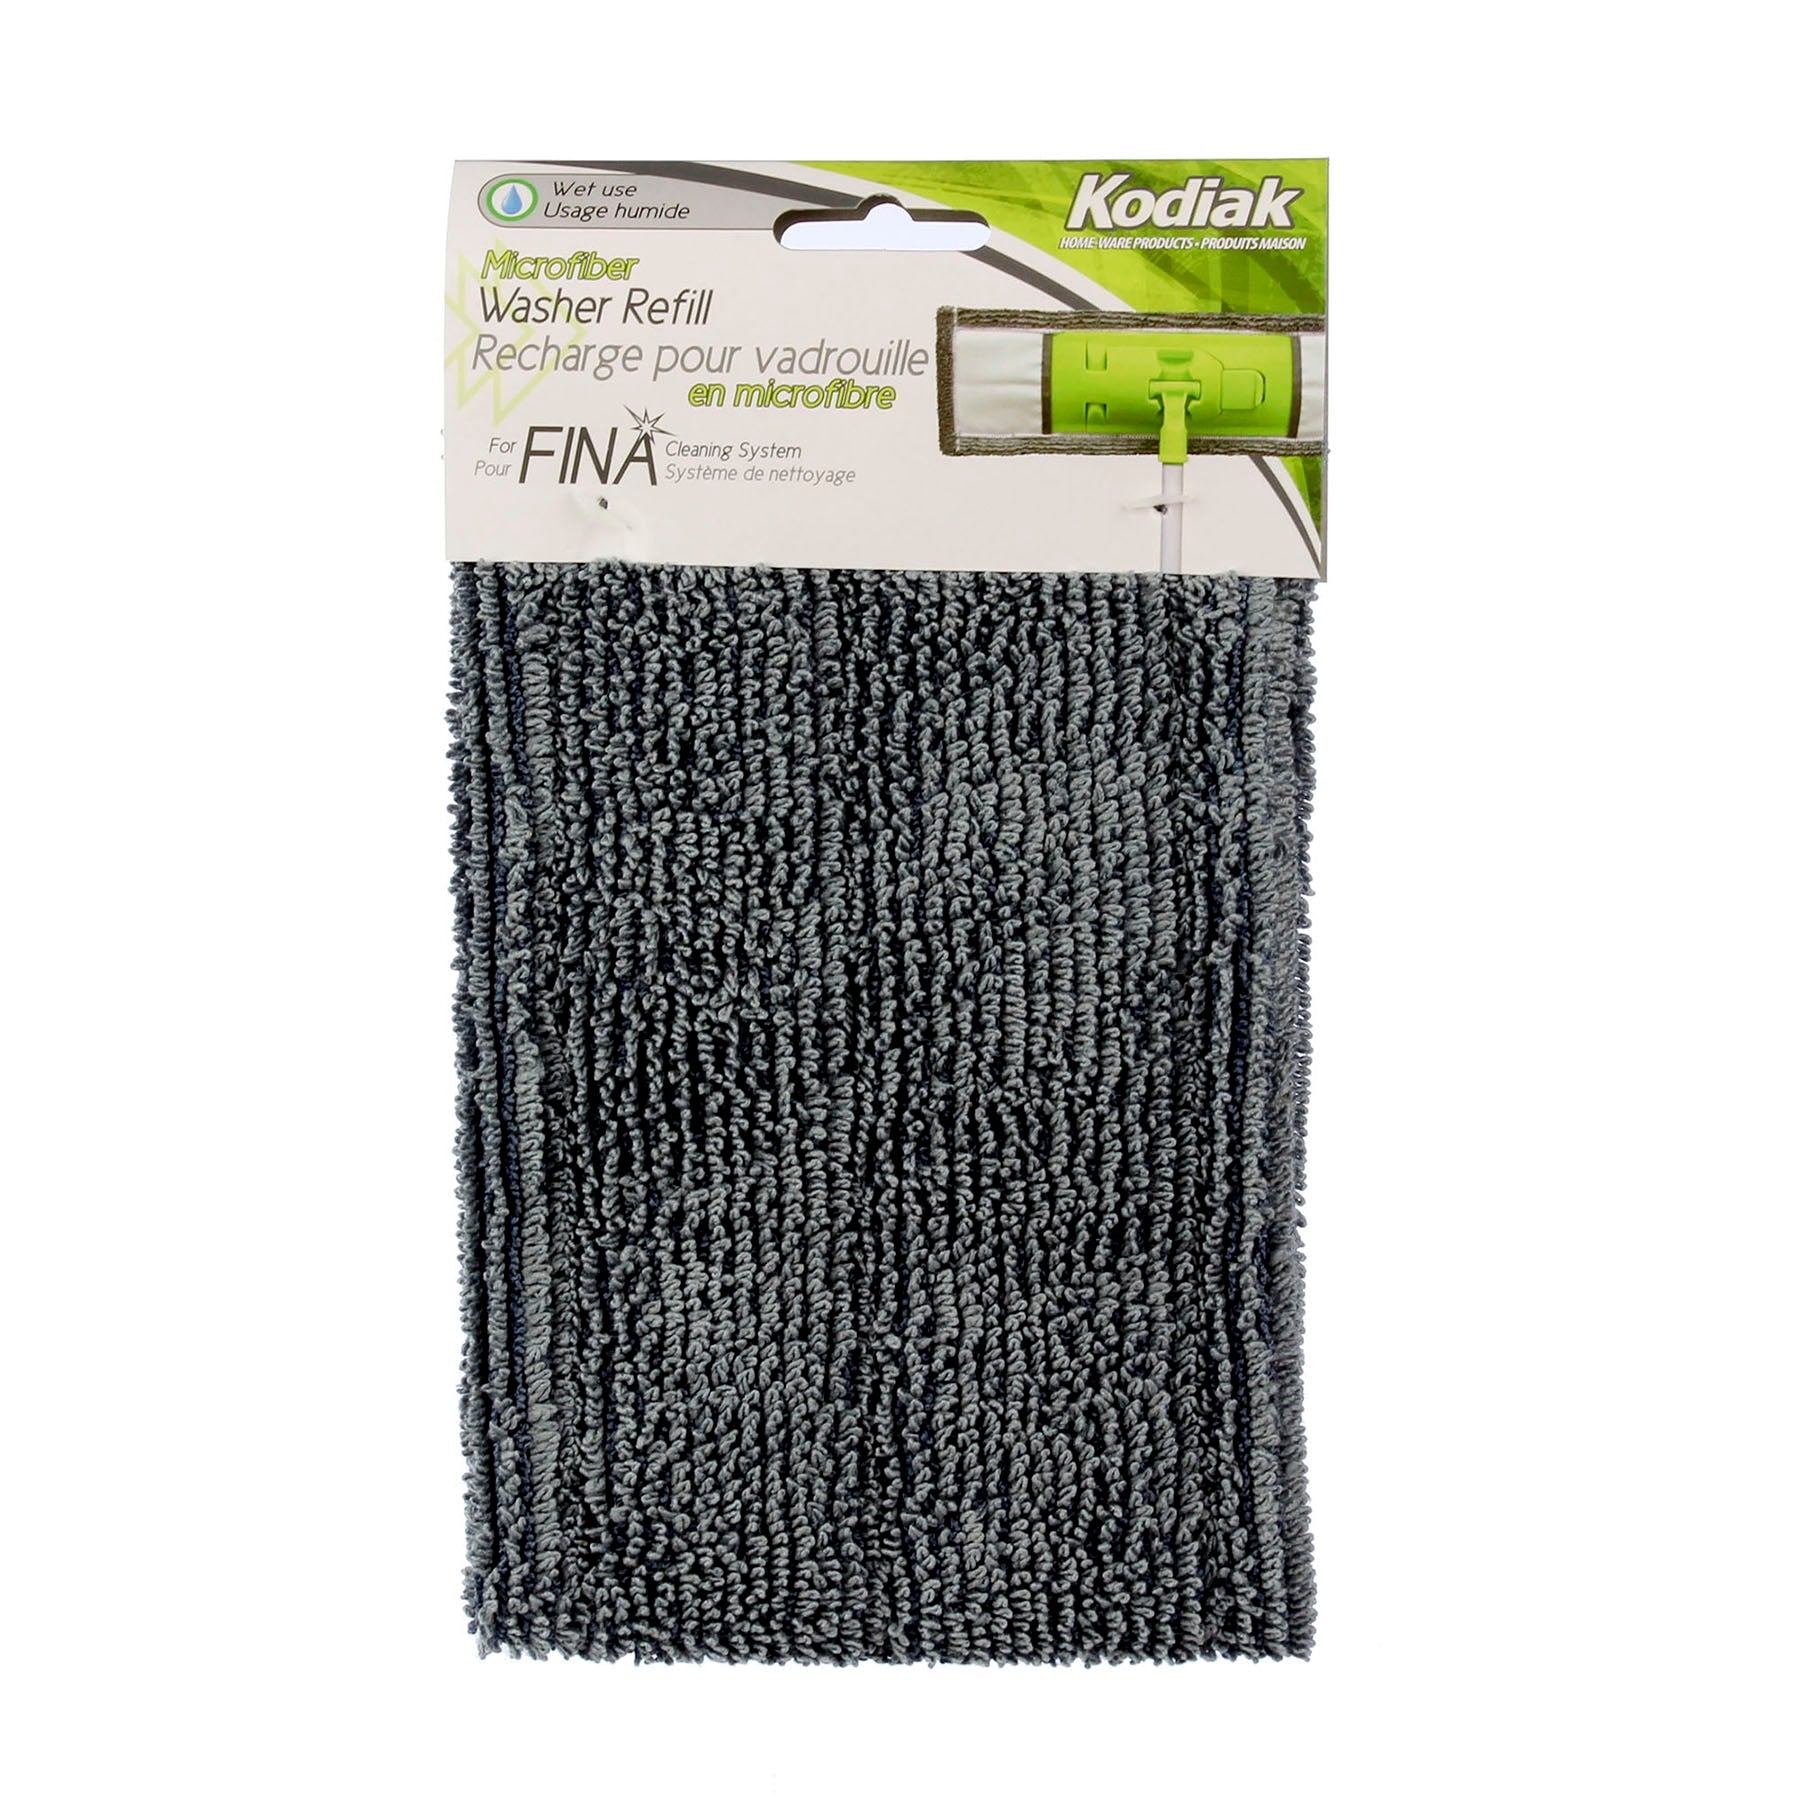 Kodiak Fina Sweeper Refill - Microfiber - Wet Use